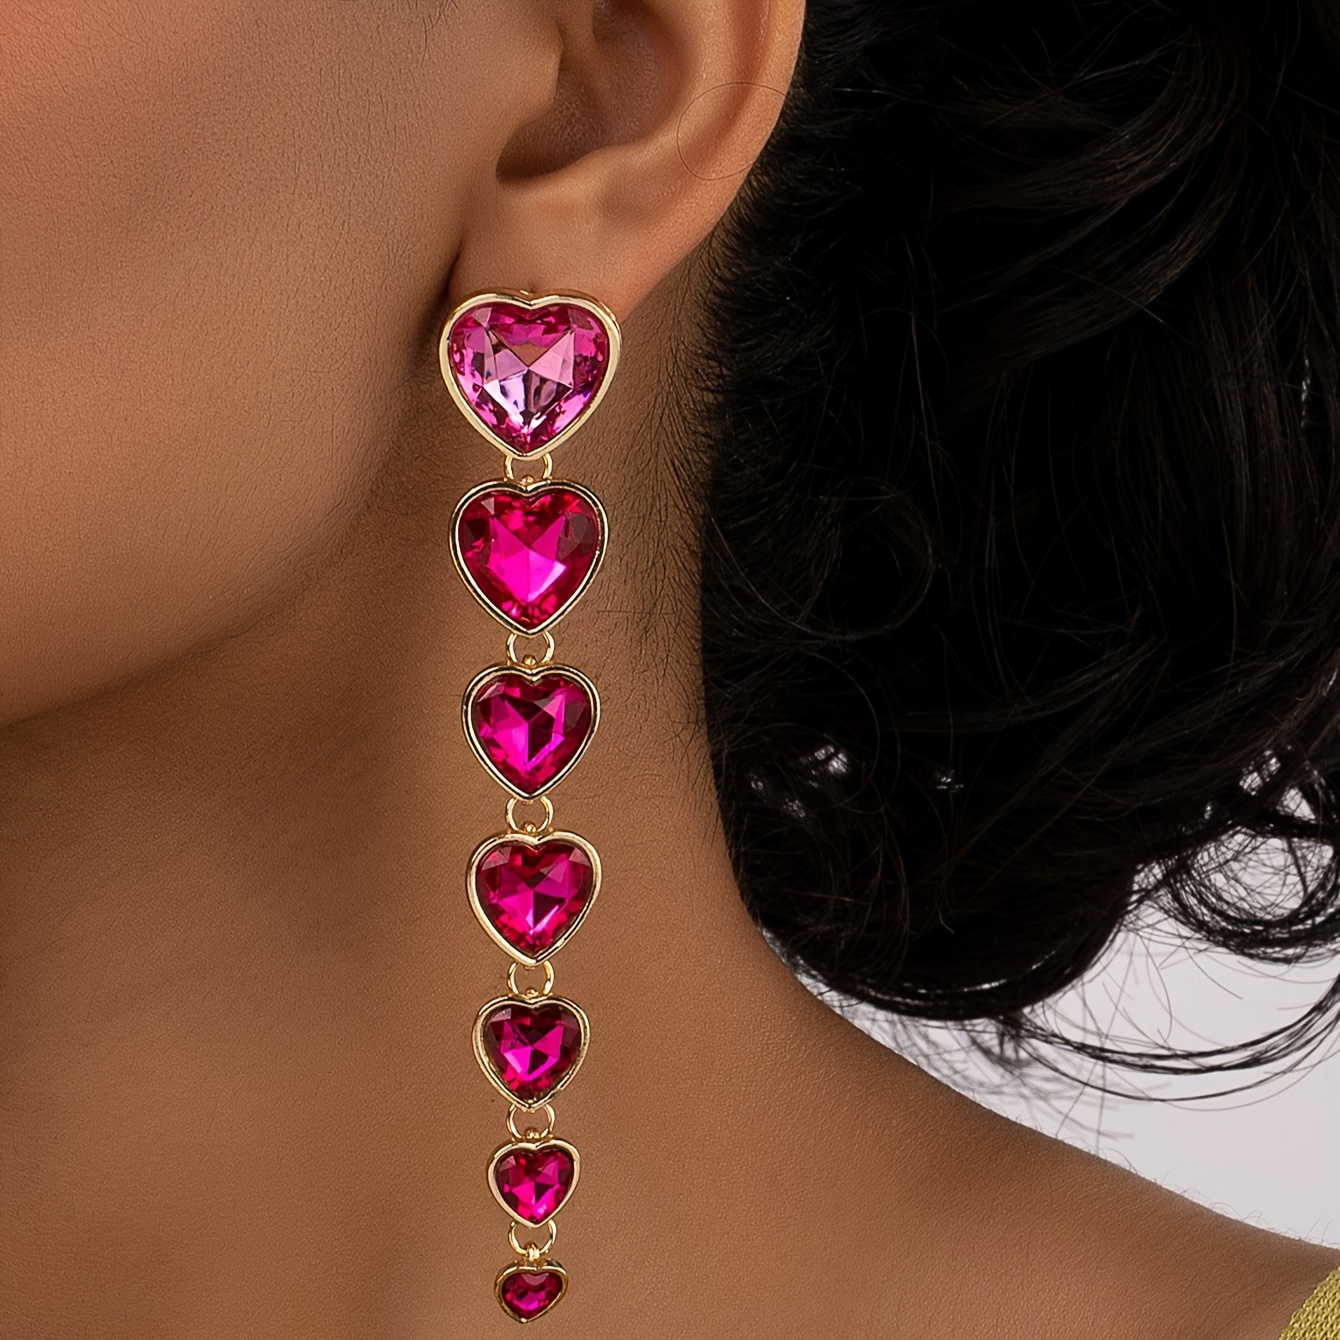 

Long Heart Tassel Design Dangle Earrings Zinc Alloy Jewelry Embellished With Hot Pink Faux Stones Elegant Sexy Style Party Earrings